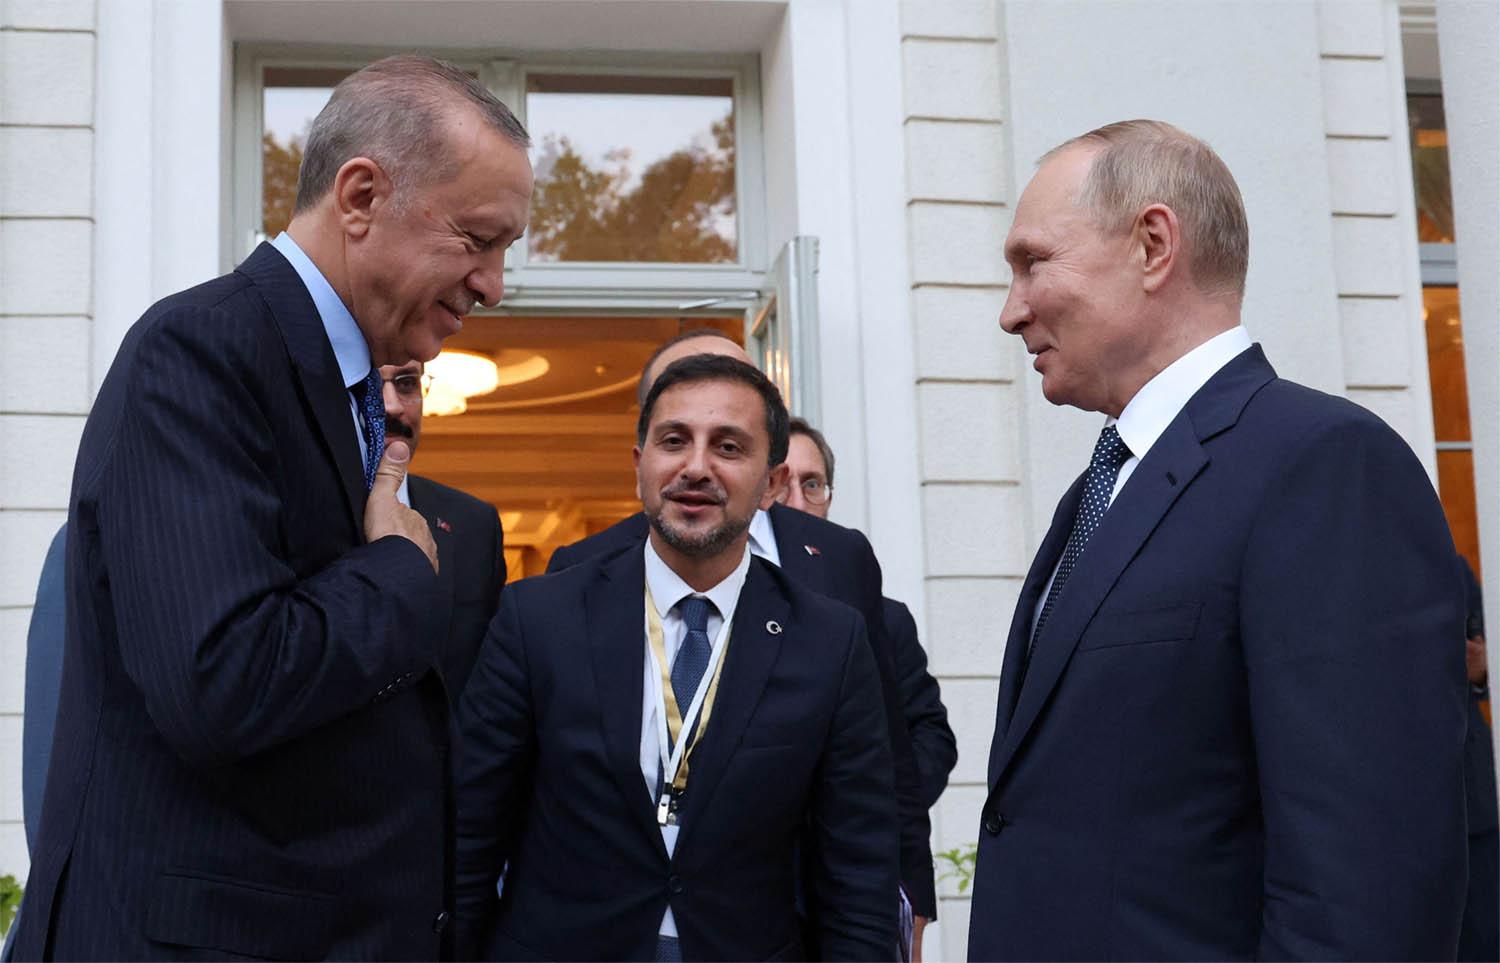 Putin bids farewell to Erdogan after a meeting in Sochi